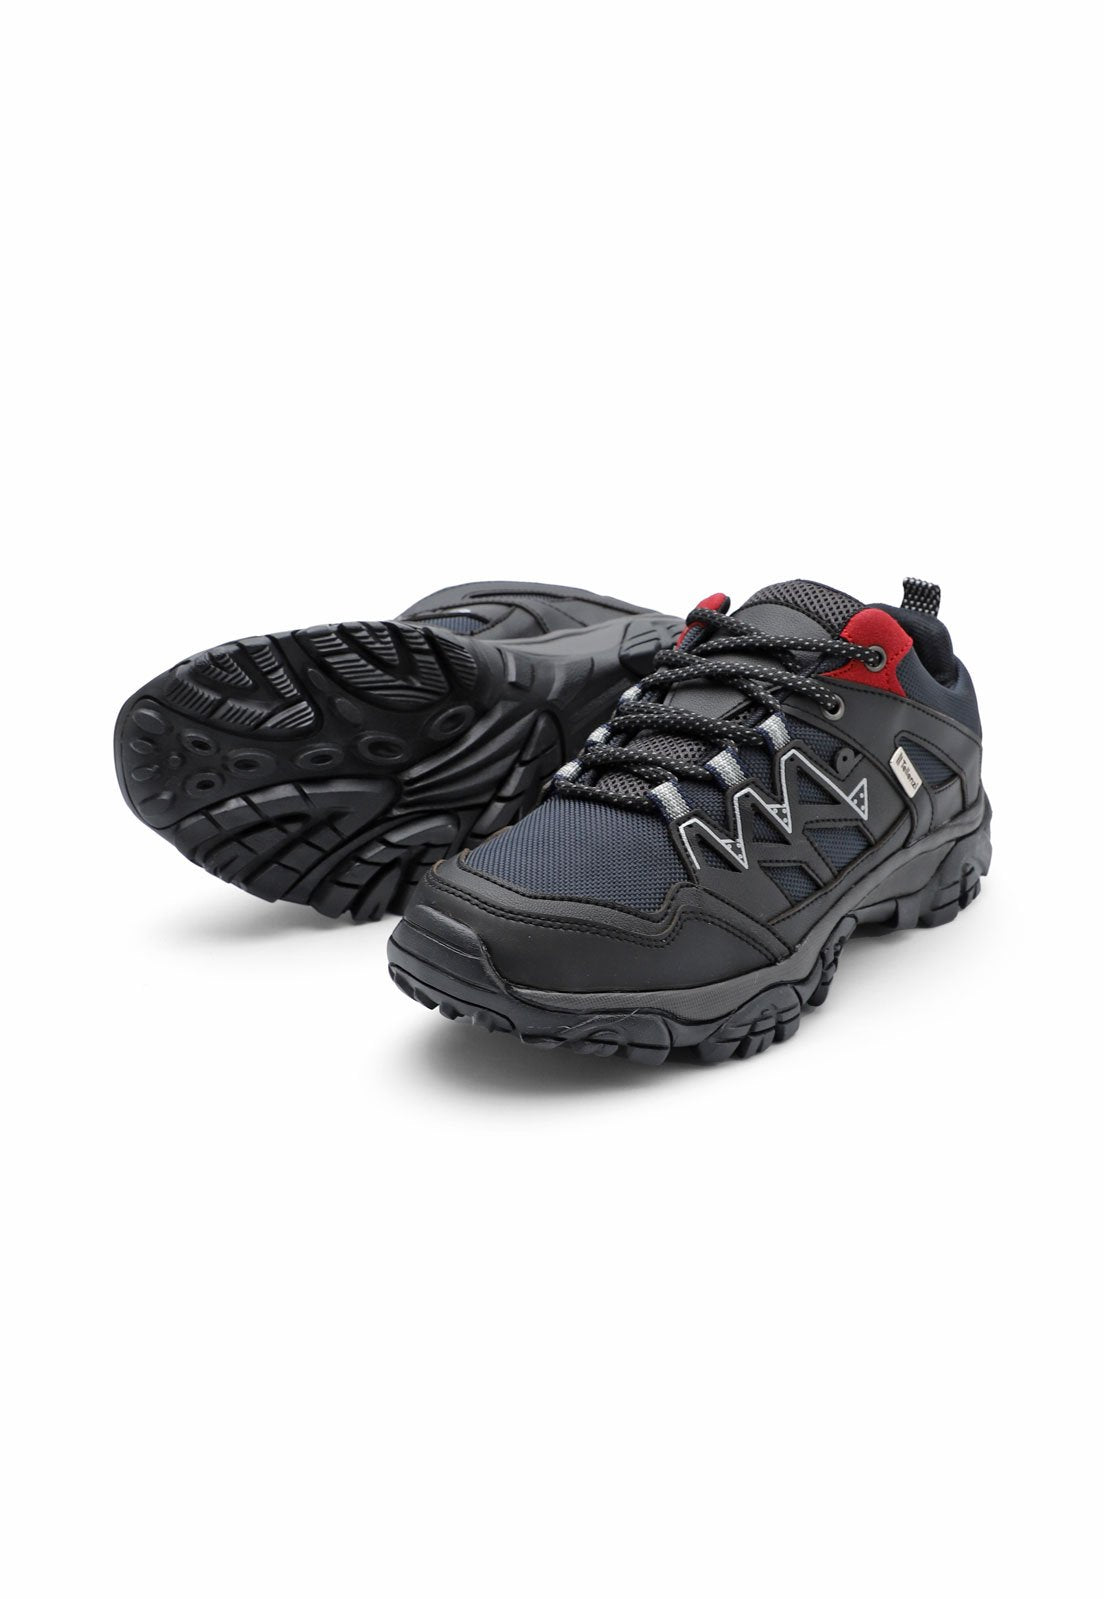 Zapato Hombre Outdoor Negro-Rojo Tellenzi 2309